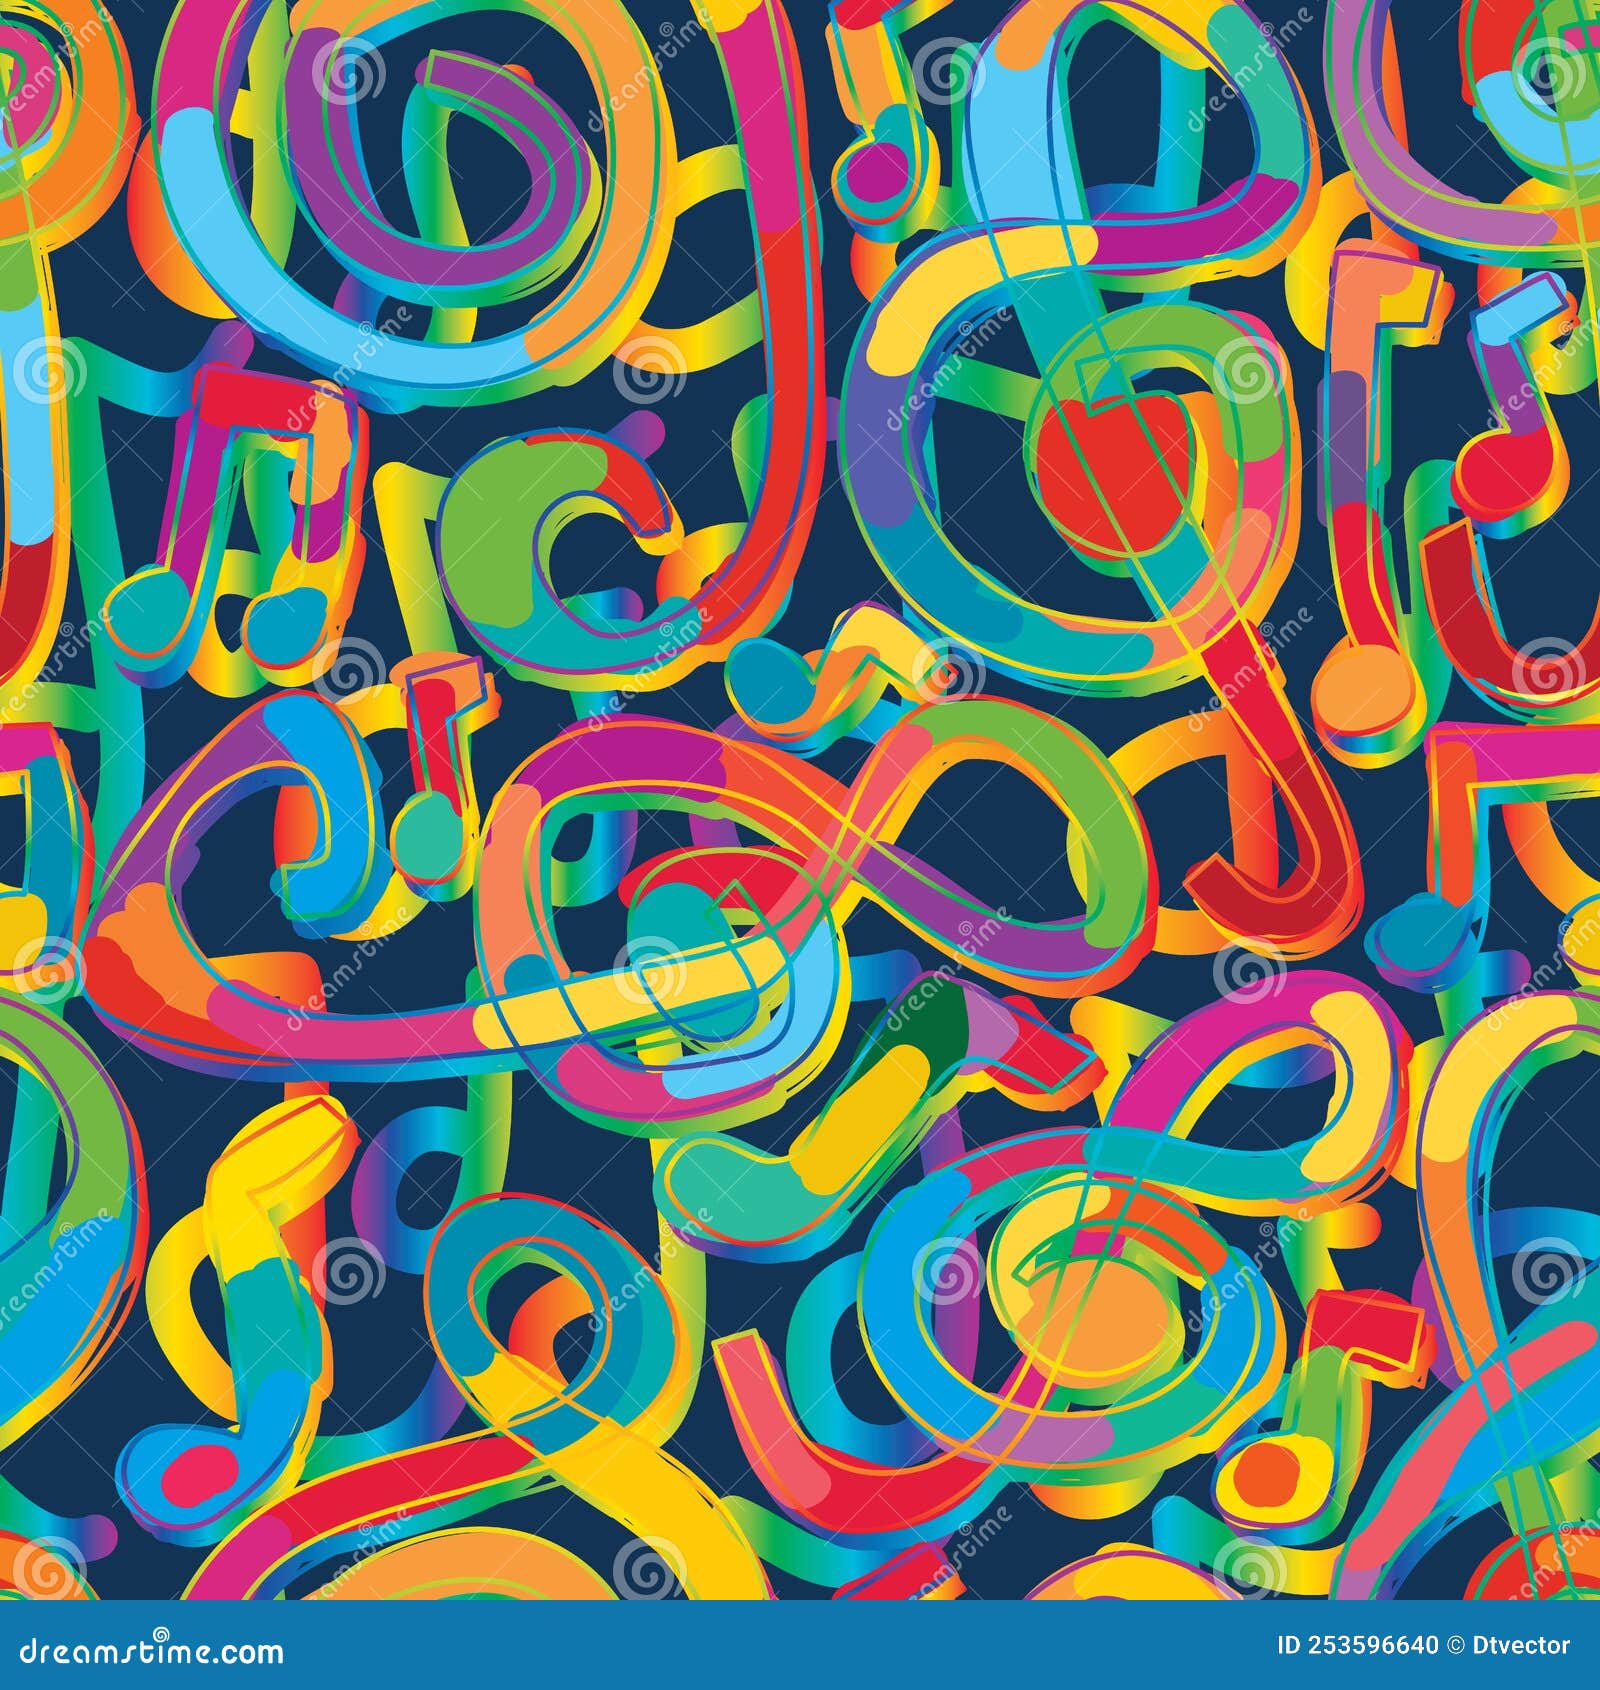 music note style dance rainbow seamless pattern